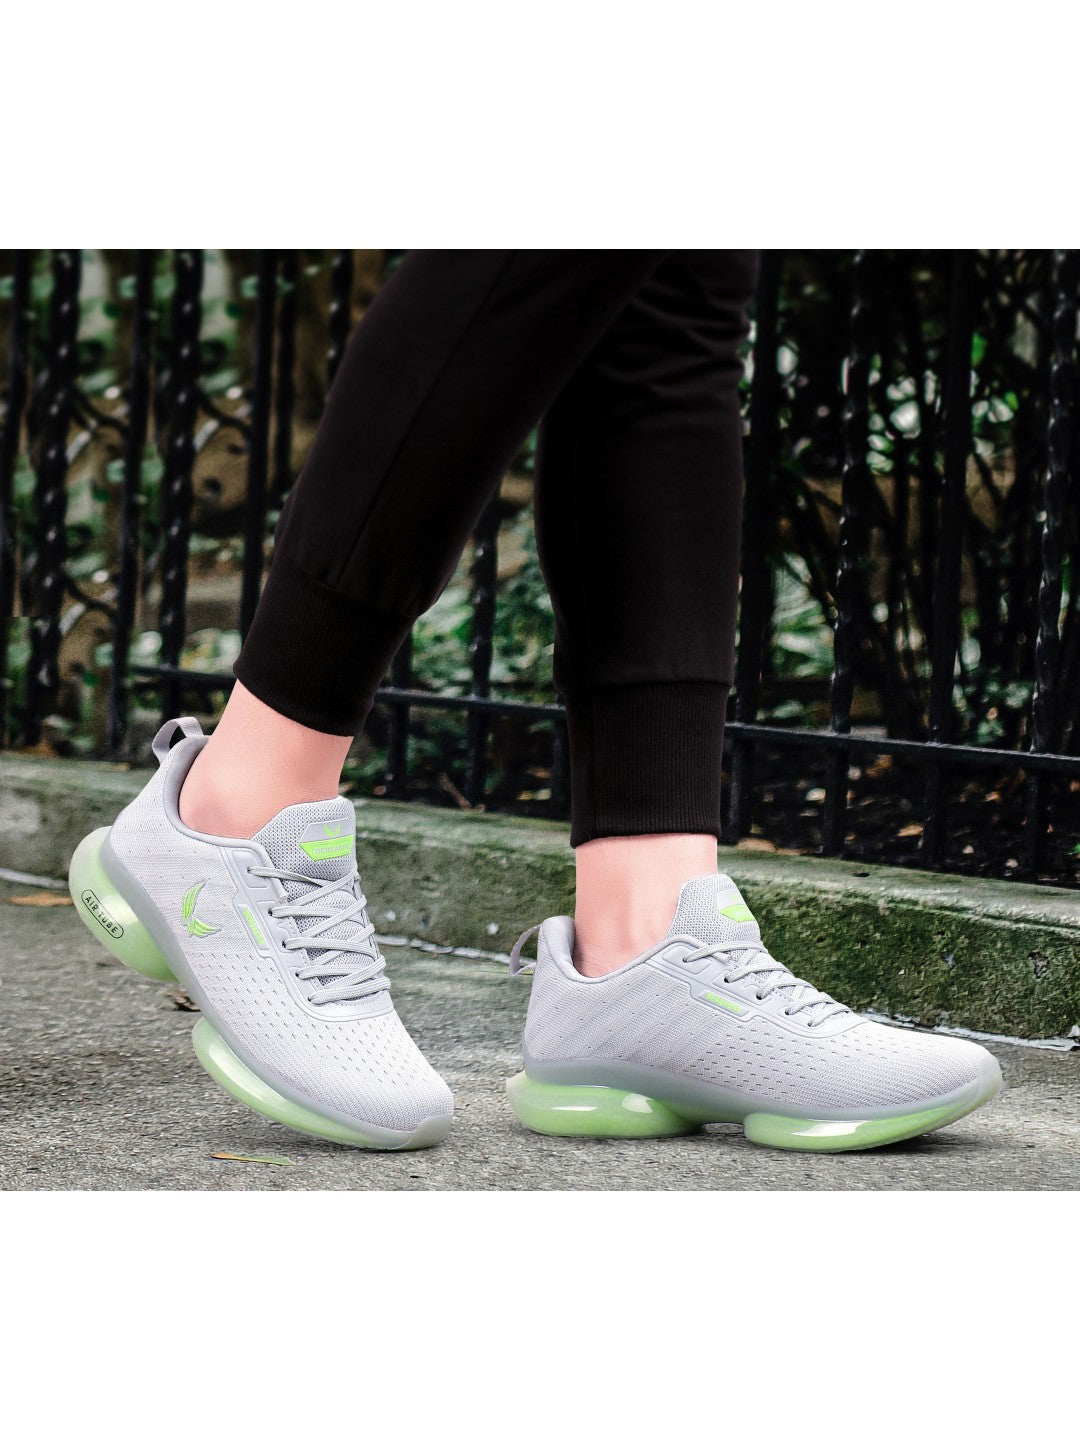 Bersache Lightweight Casual Sneaker Shoes For Men Grey-9037